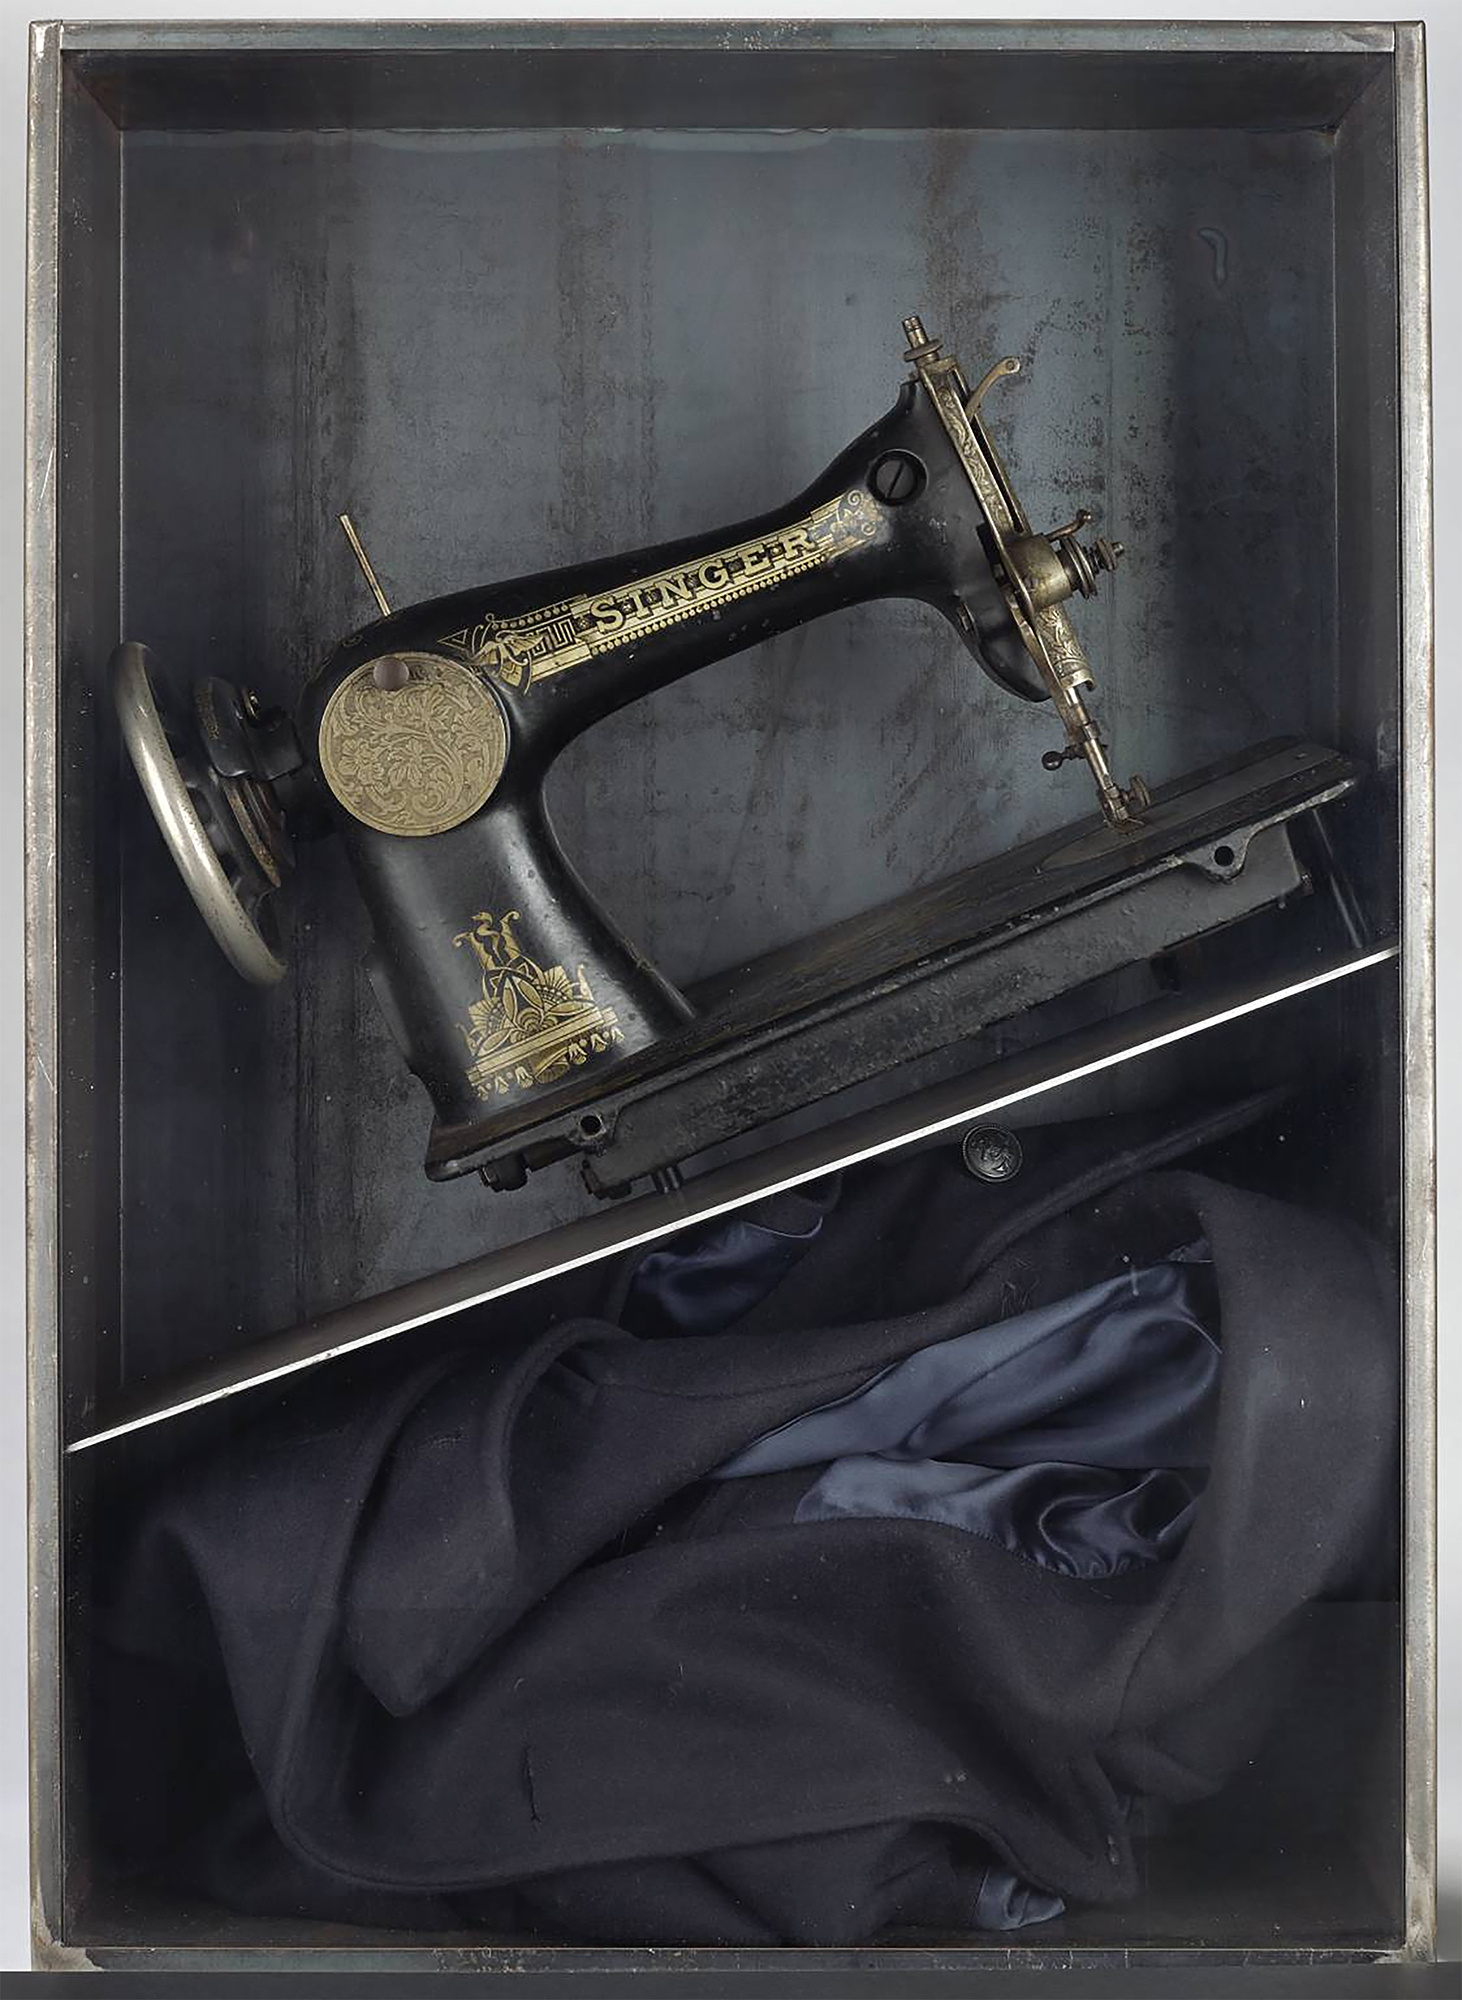 Jannis Kounellis, Untitled (Sewing Machine), 2004, Metal, Glass, Sewing Machine, Coat,  70 × 50 × 20 cm